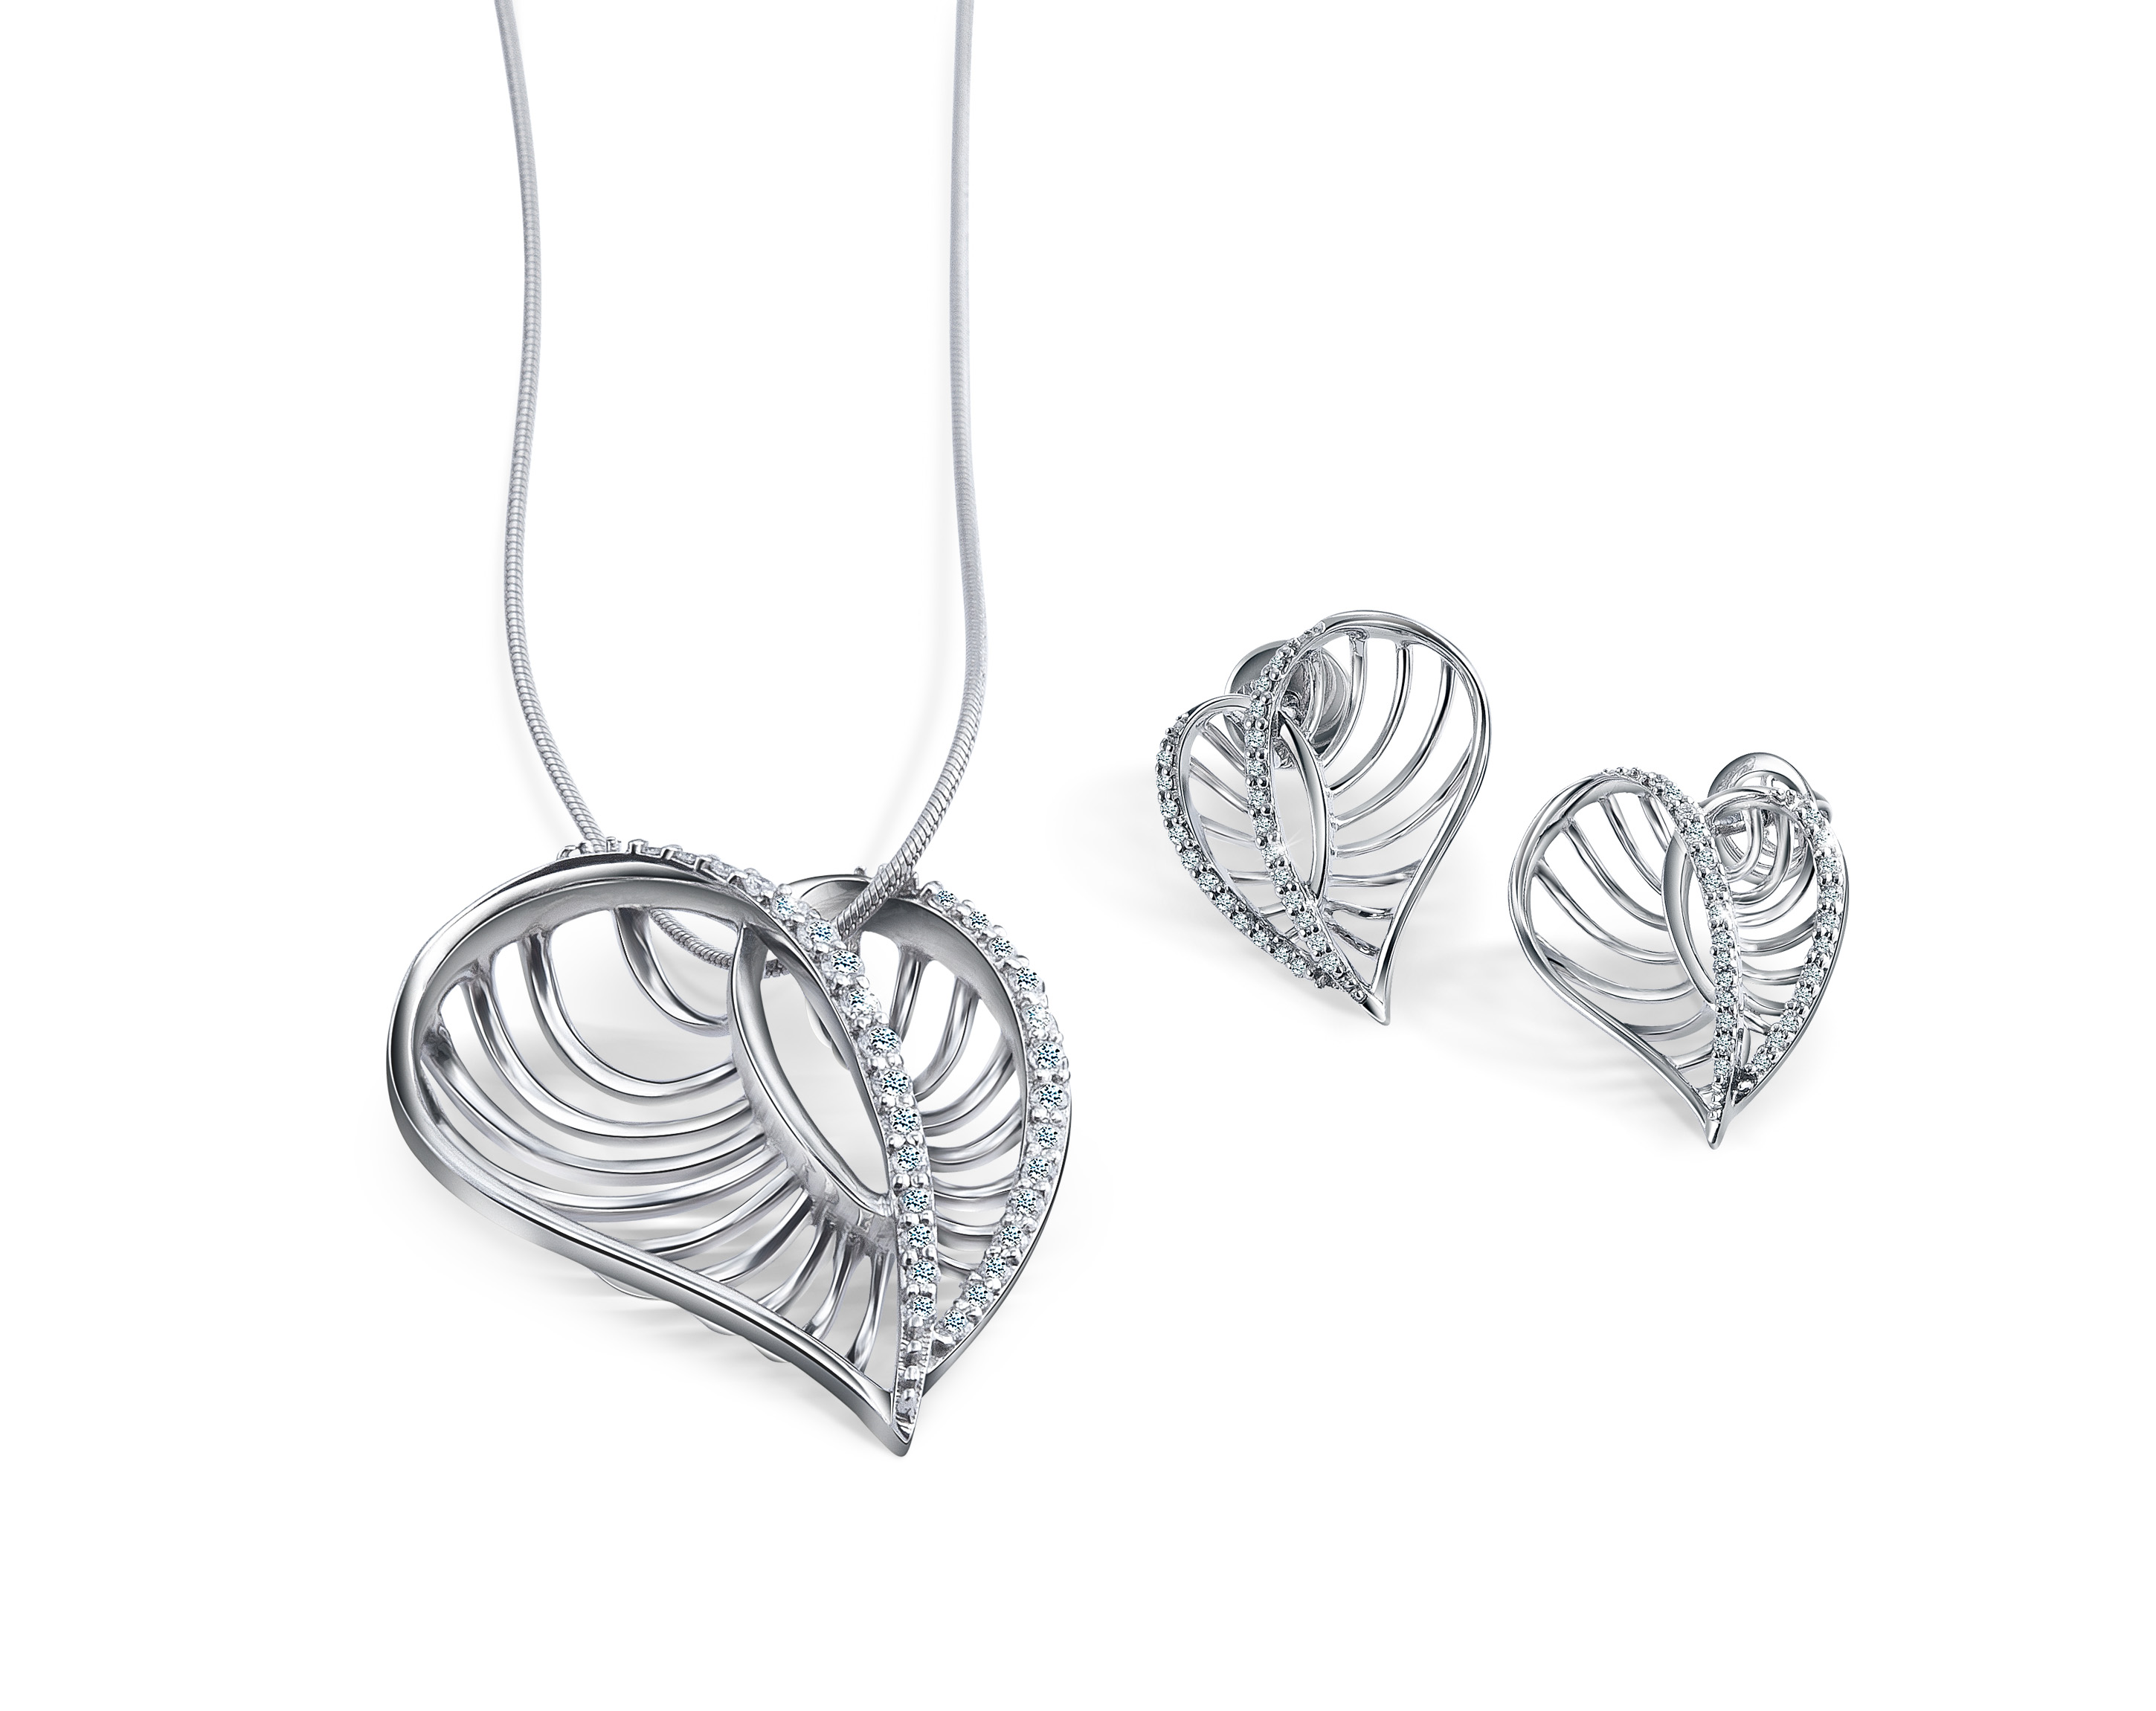 Unique heart shaped  platinum chain pendant & earring set from TBZ - The Original